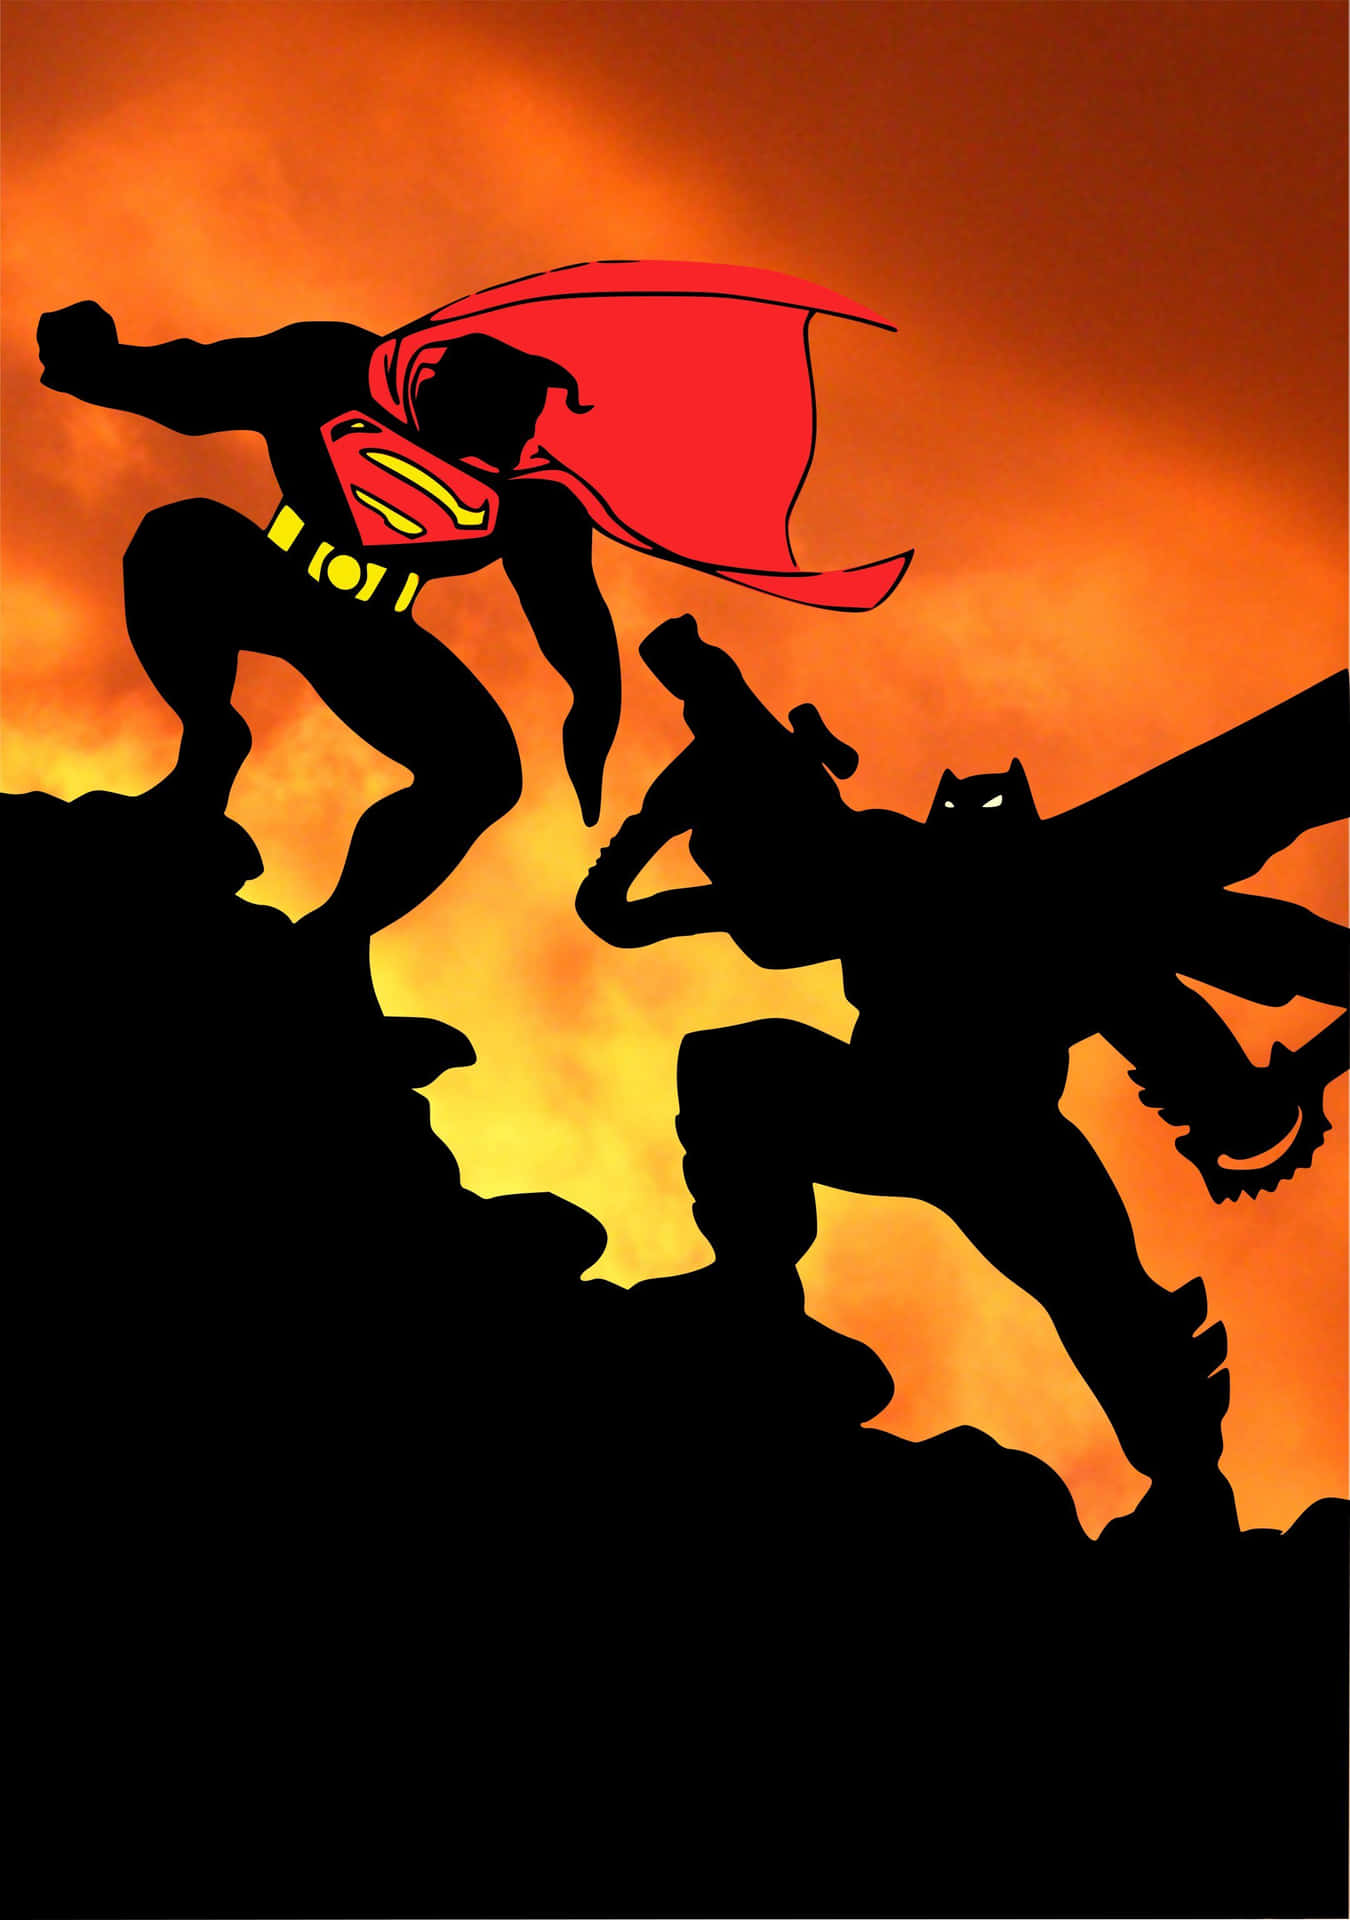 the dark knight returns batman vs superman